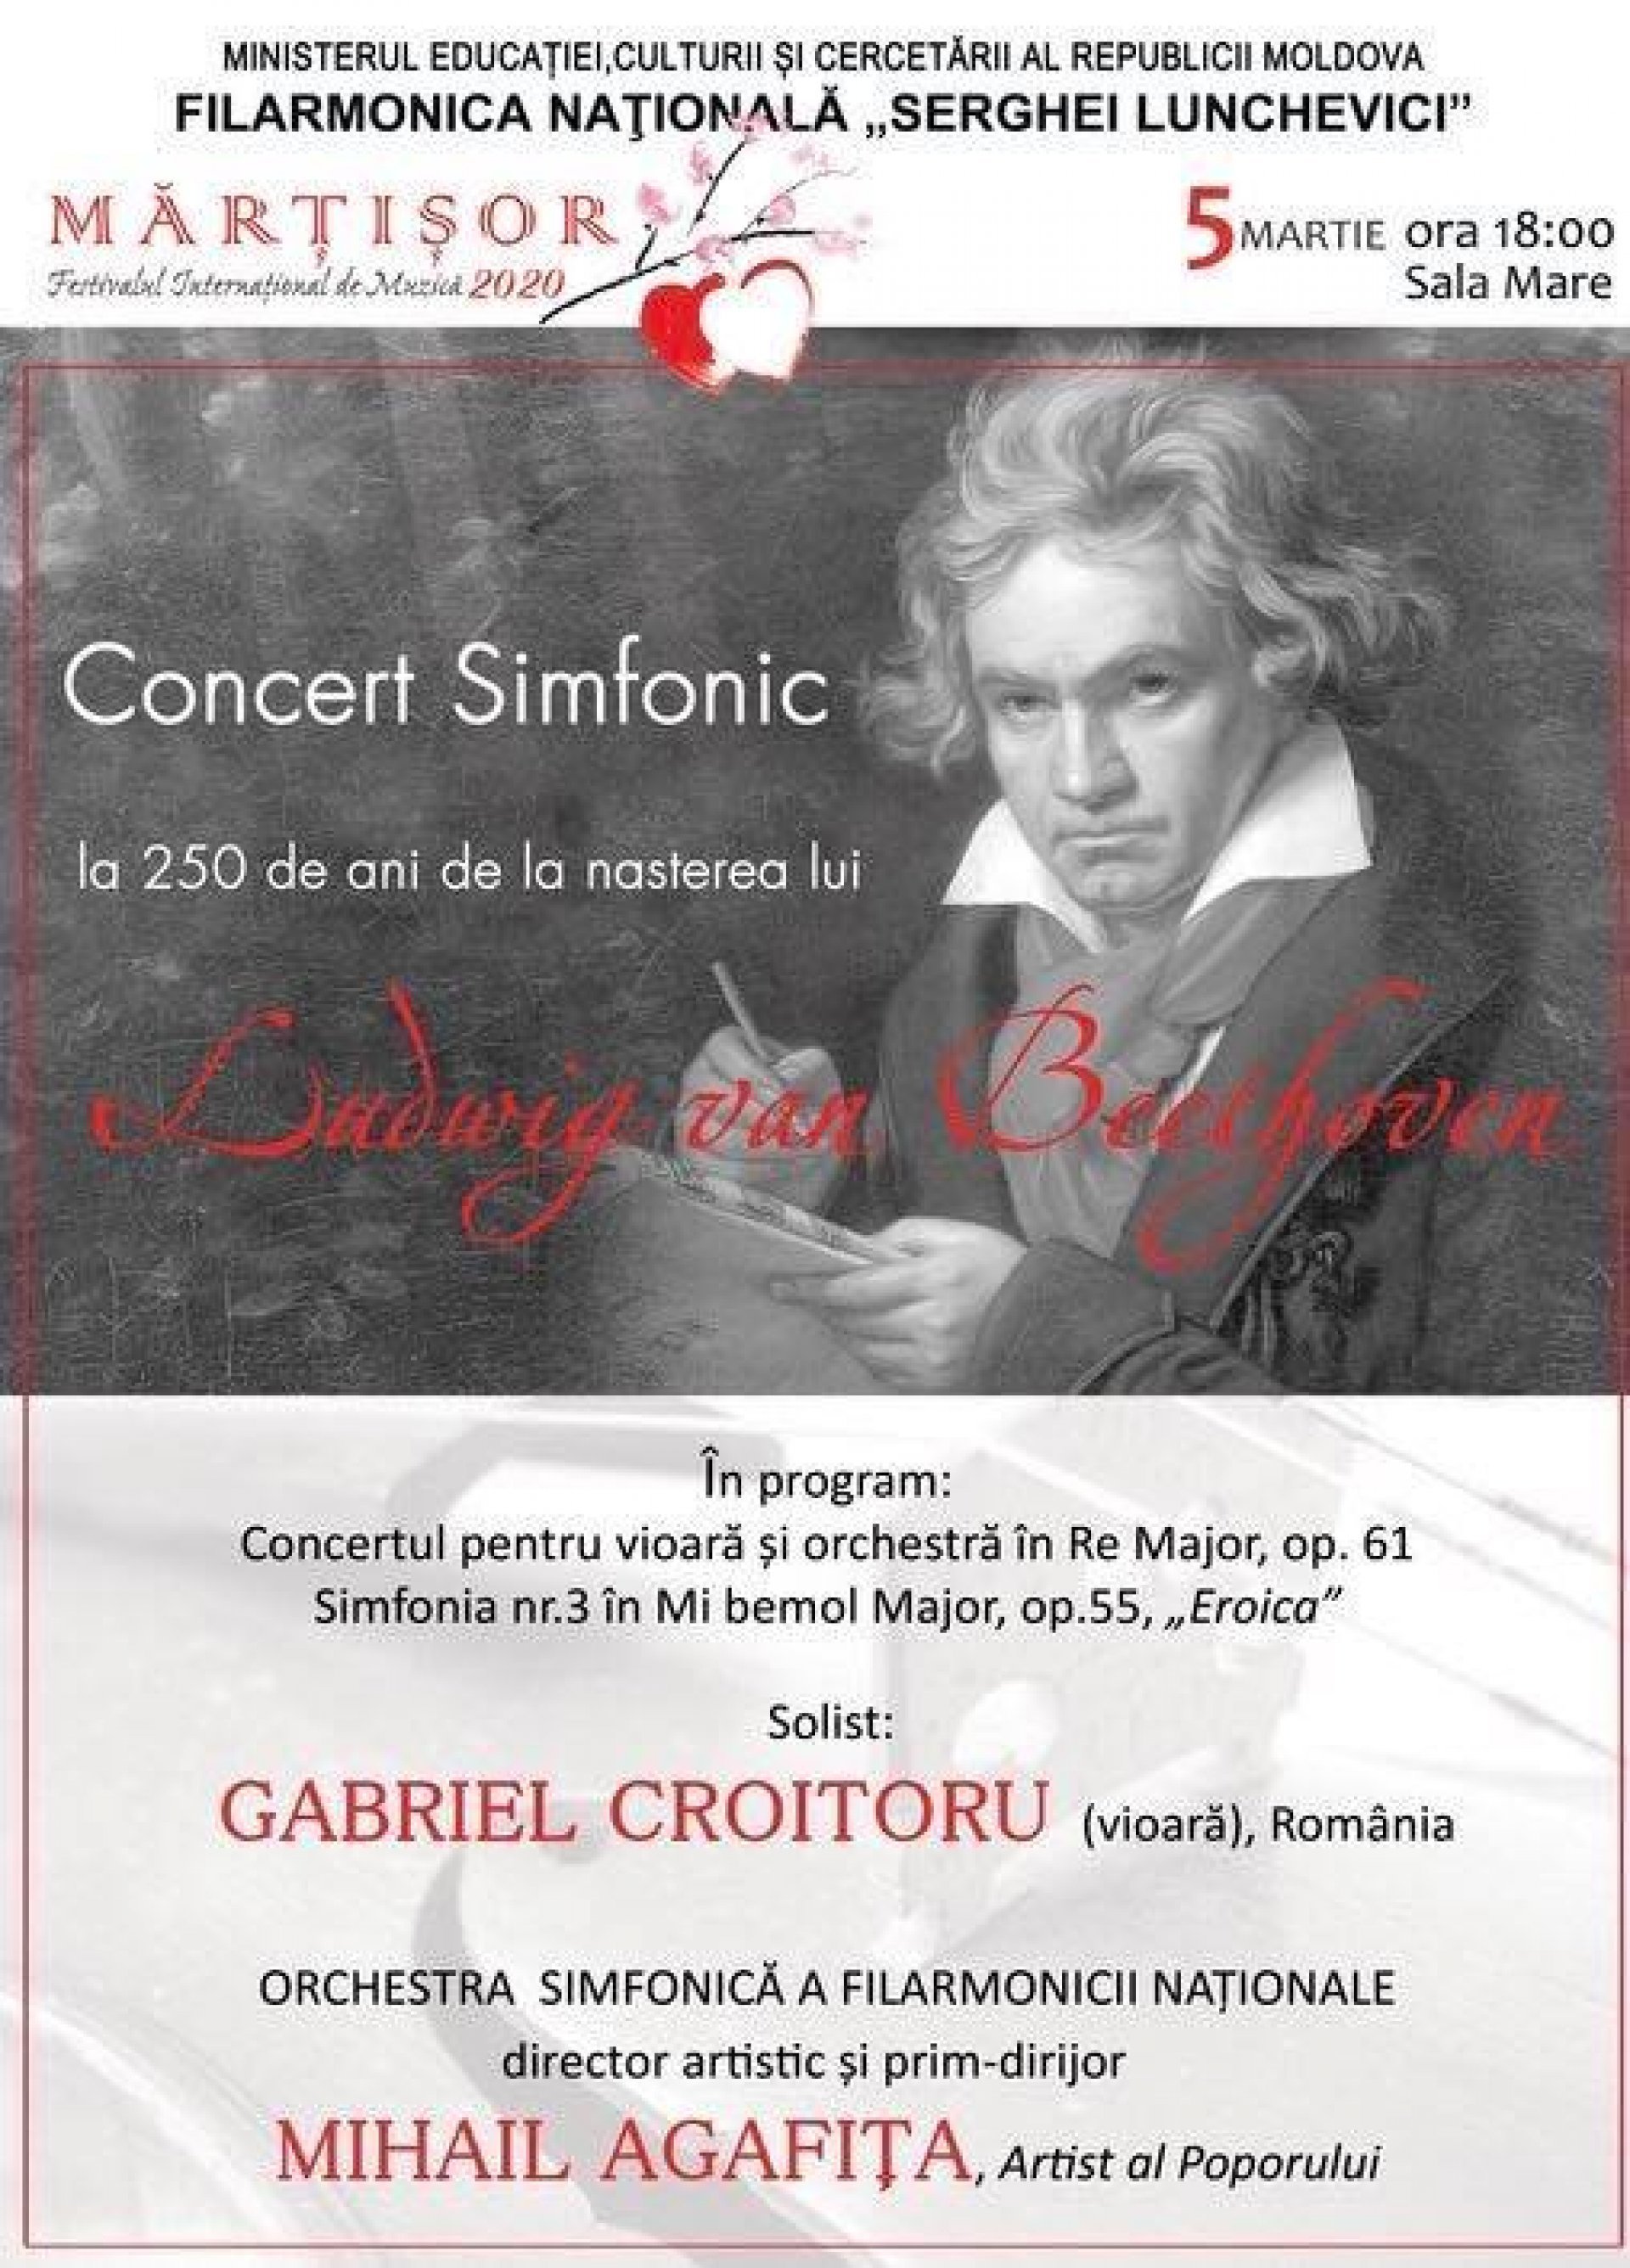 Concert Simfonic - la 250 de ani de la nasterea lui Ludwig van Beethoven